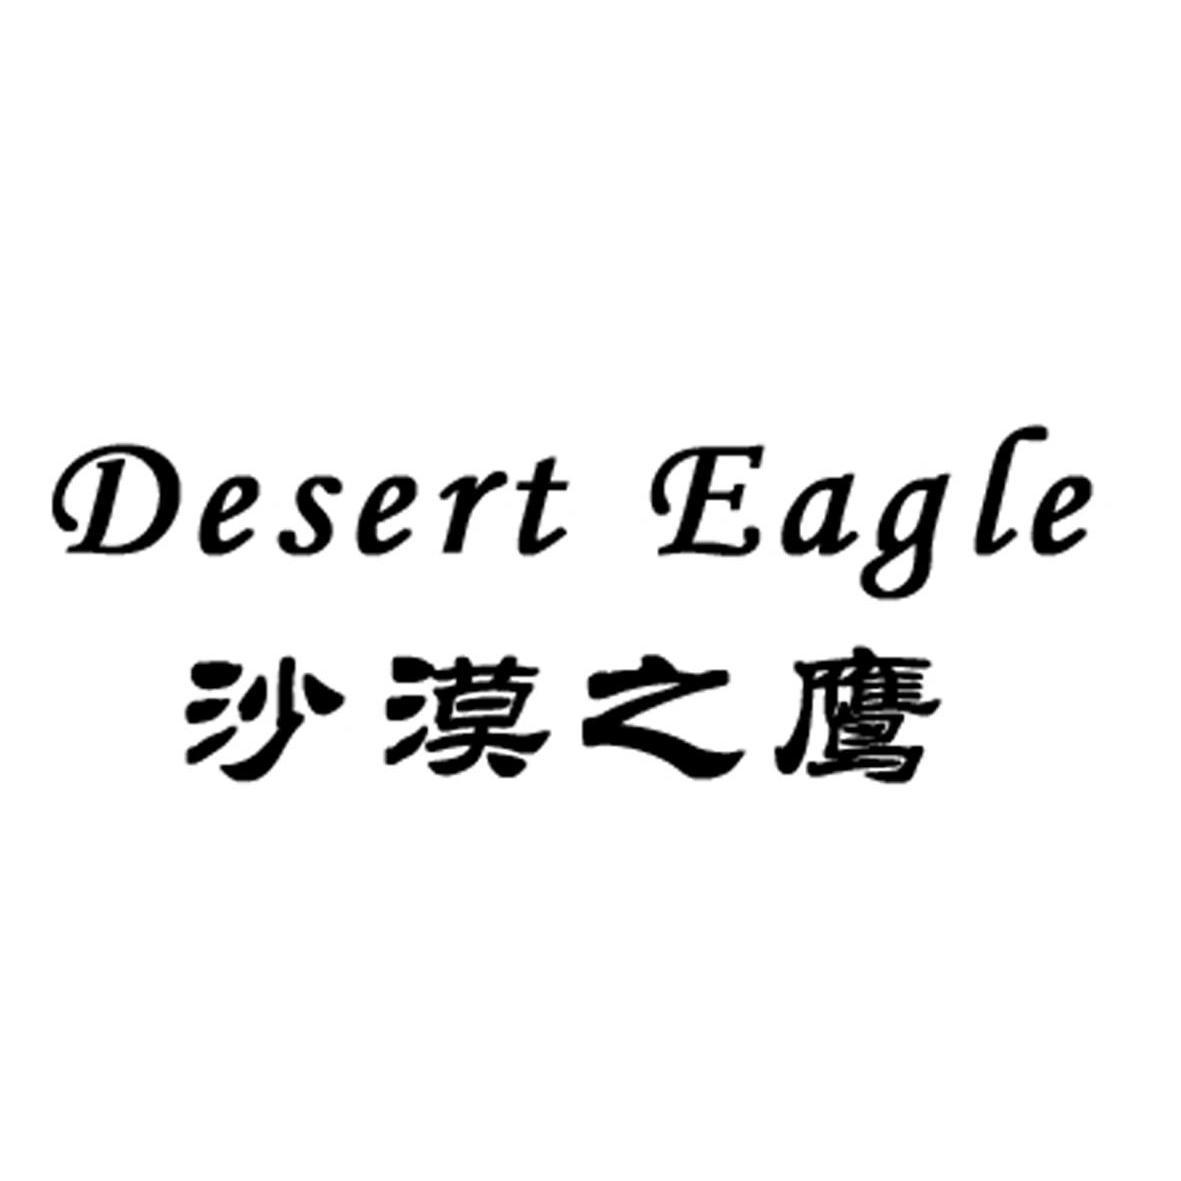 沙漠之鹰 DESERT EAGLE